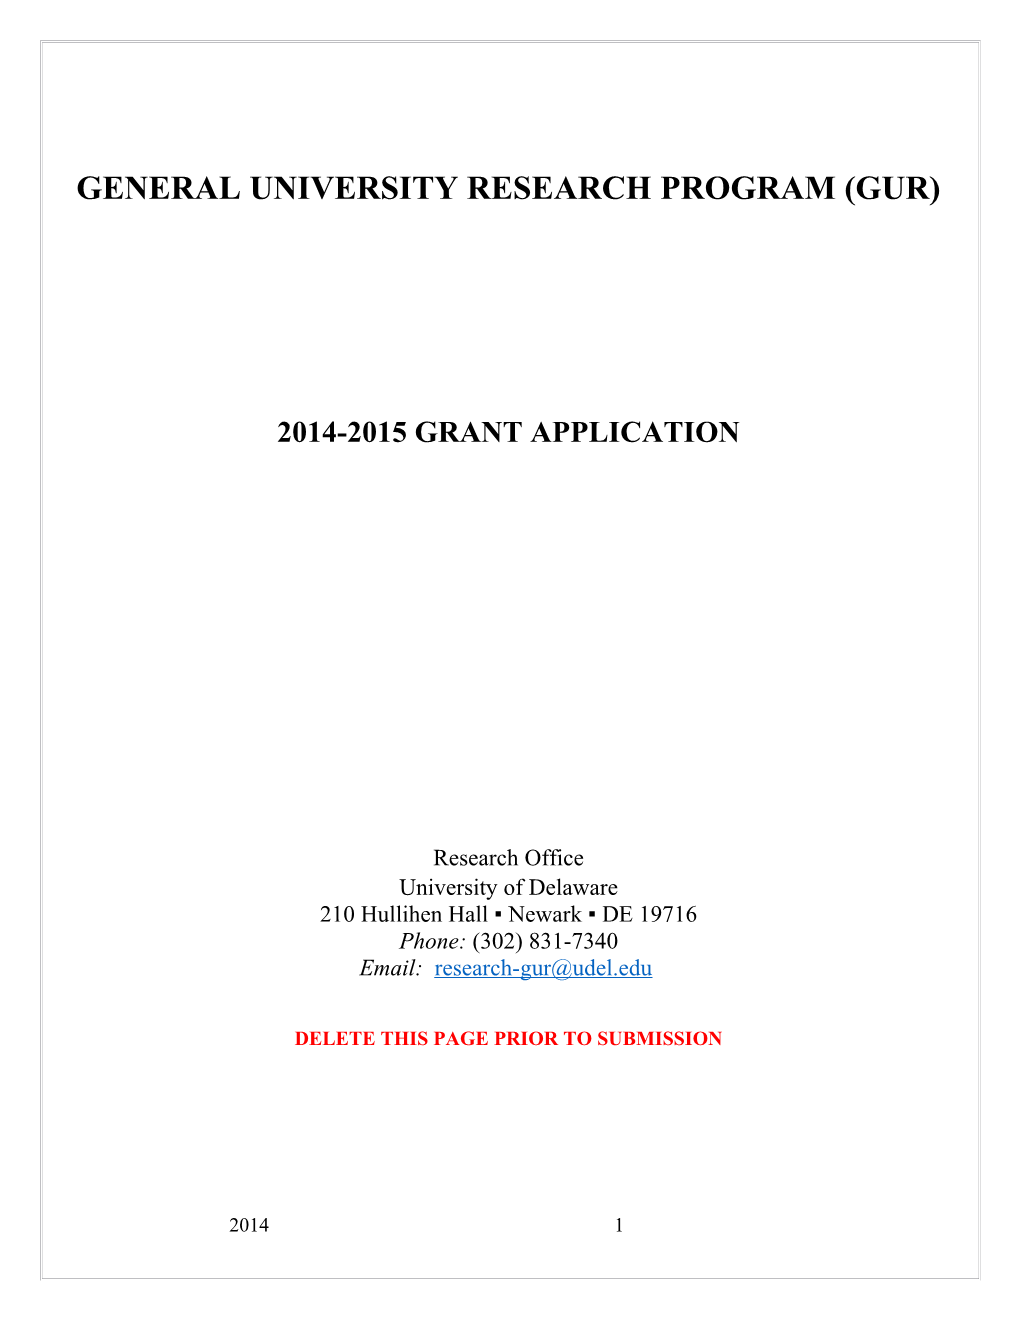 General University Research Program (Gur)